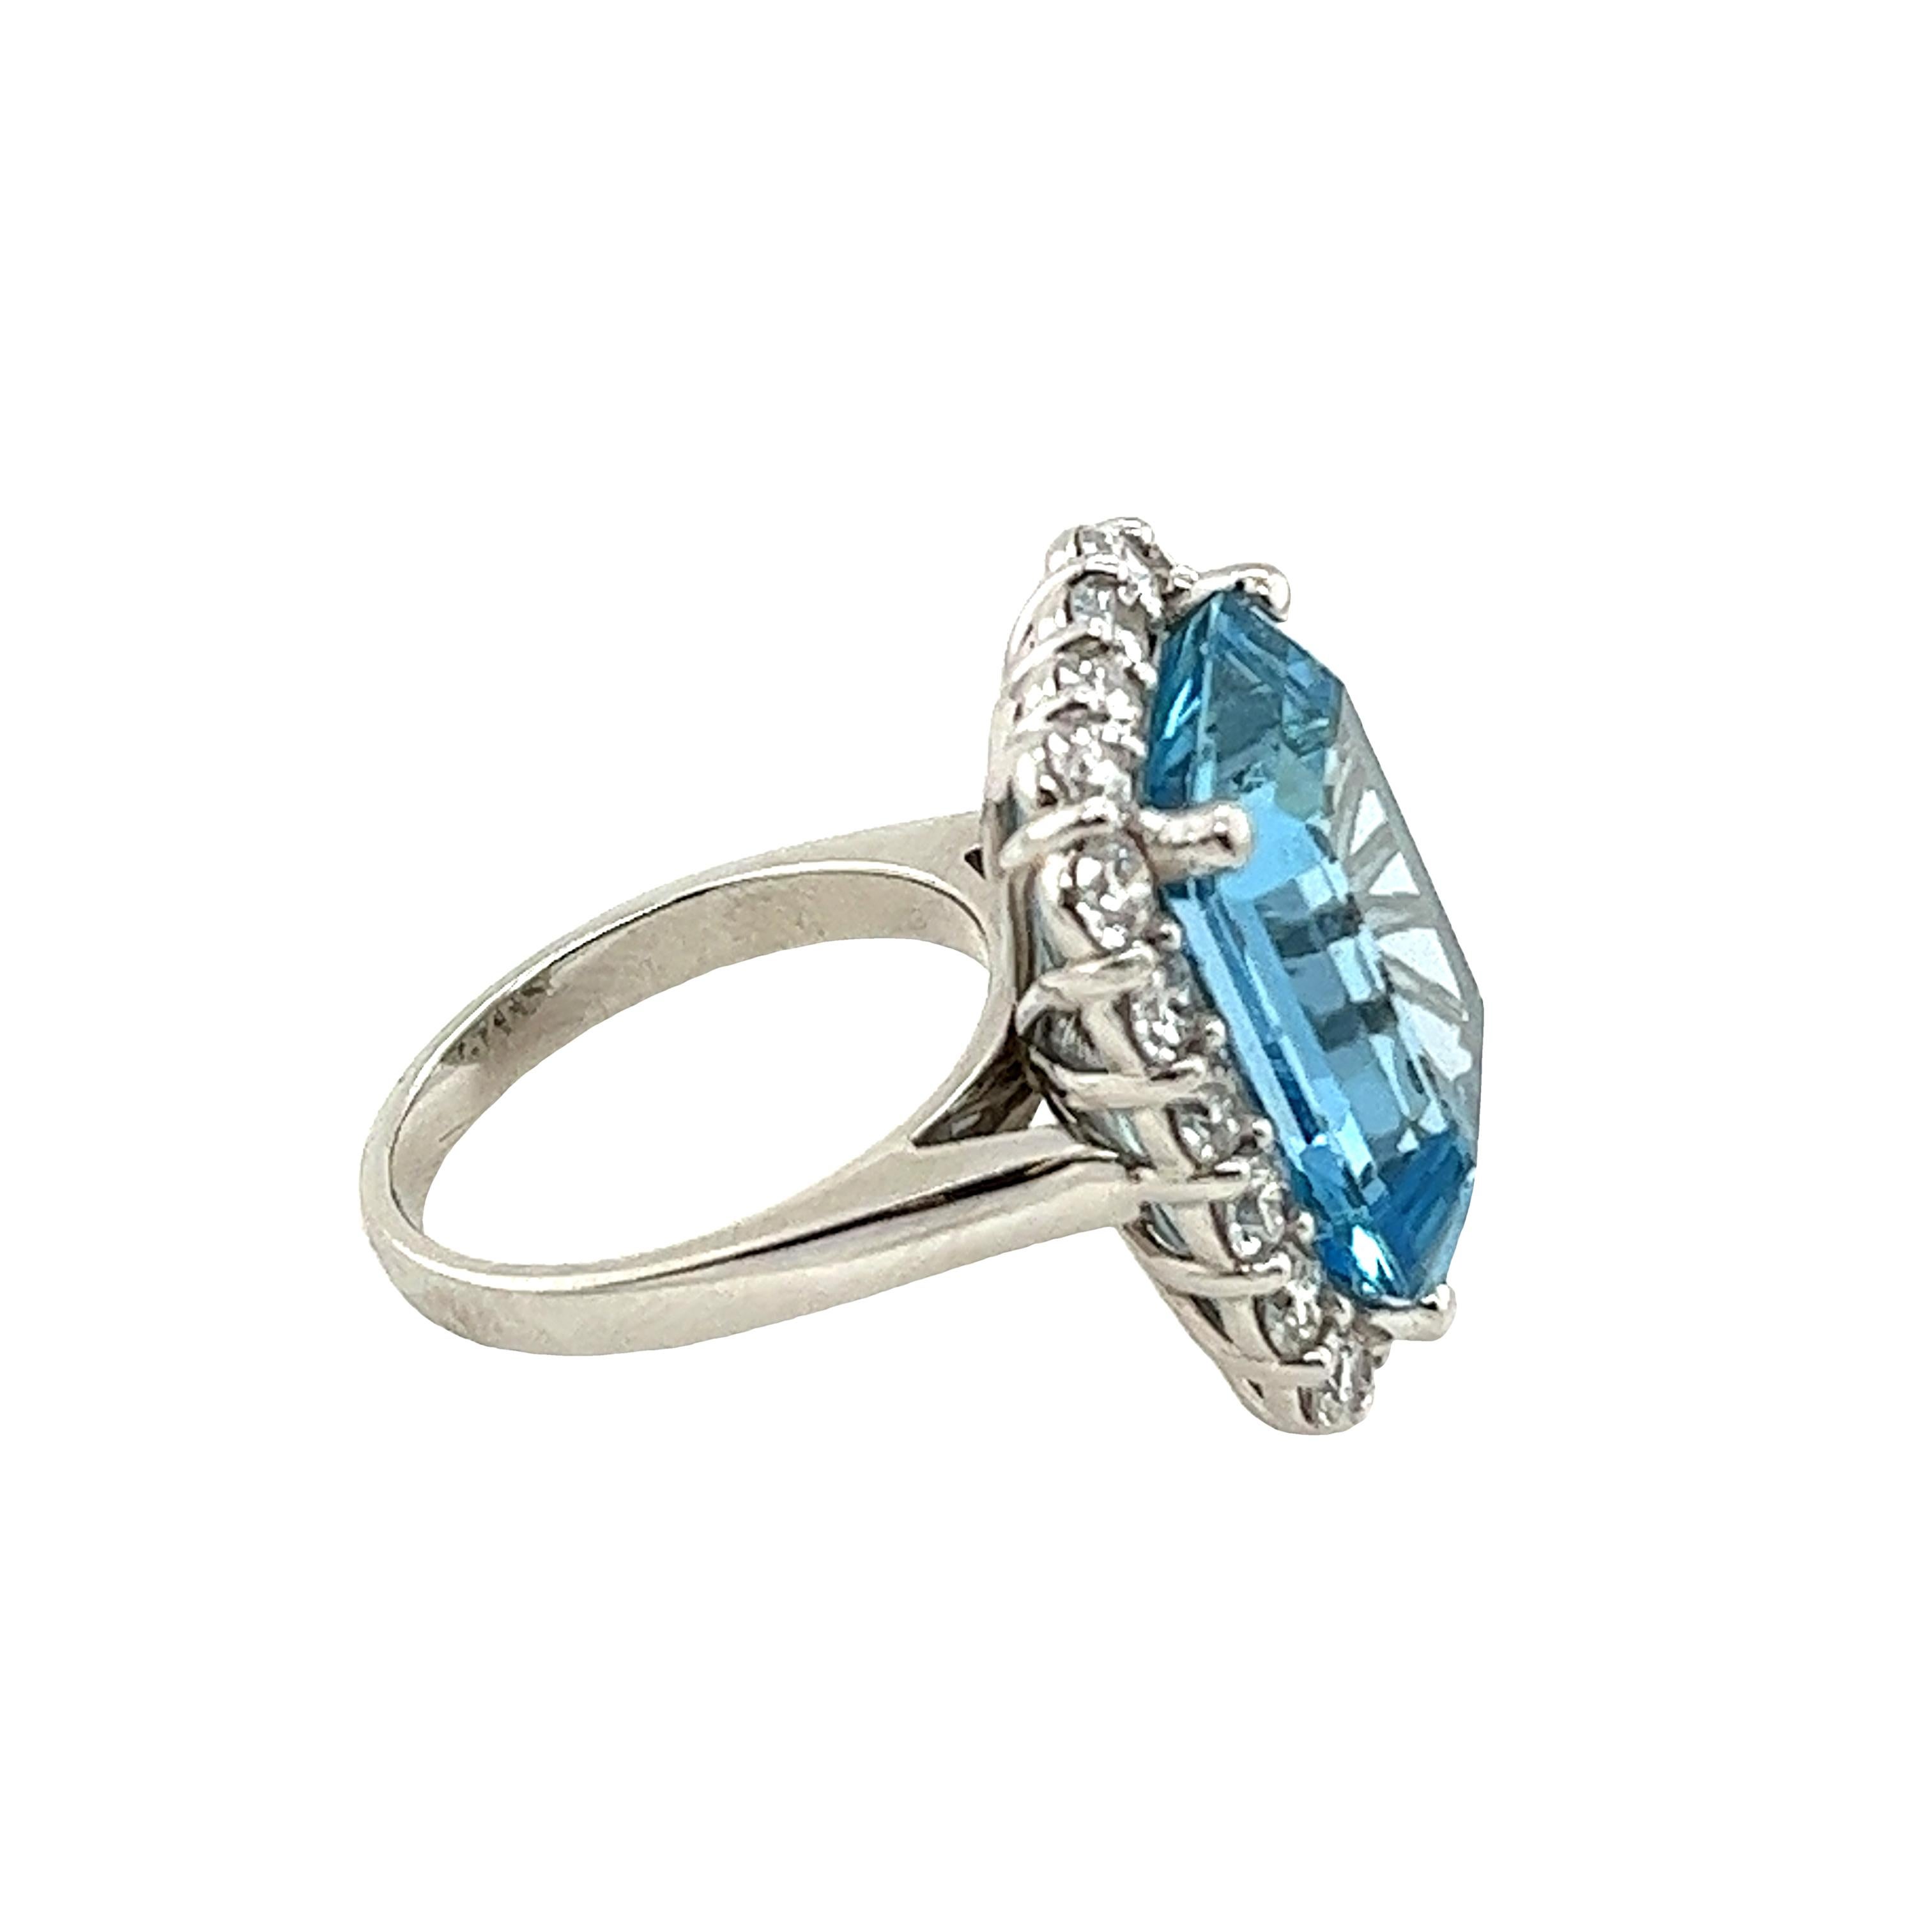 Emerald Cut 12.0ct Fine Quality Aquamarine Ring Set With 2.90ct Natural Round Diamonds